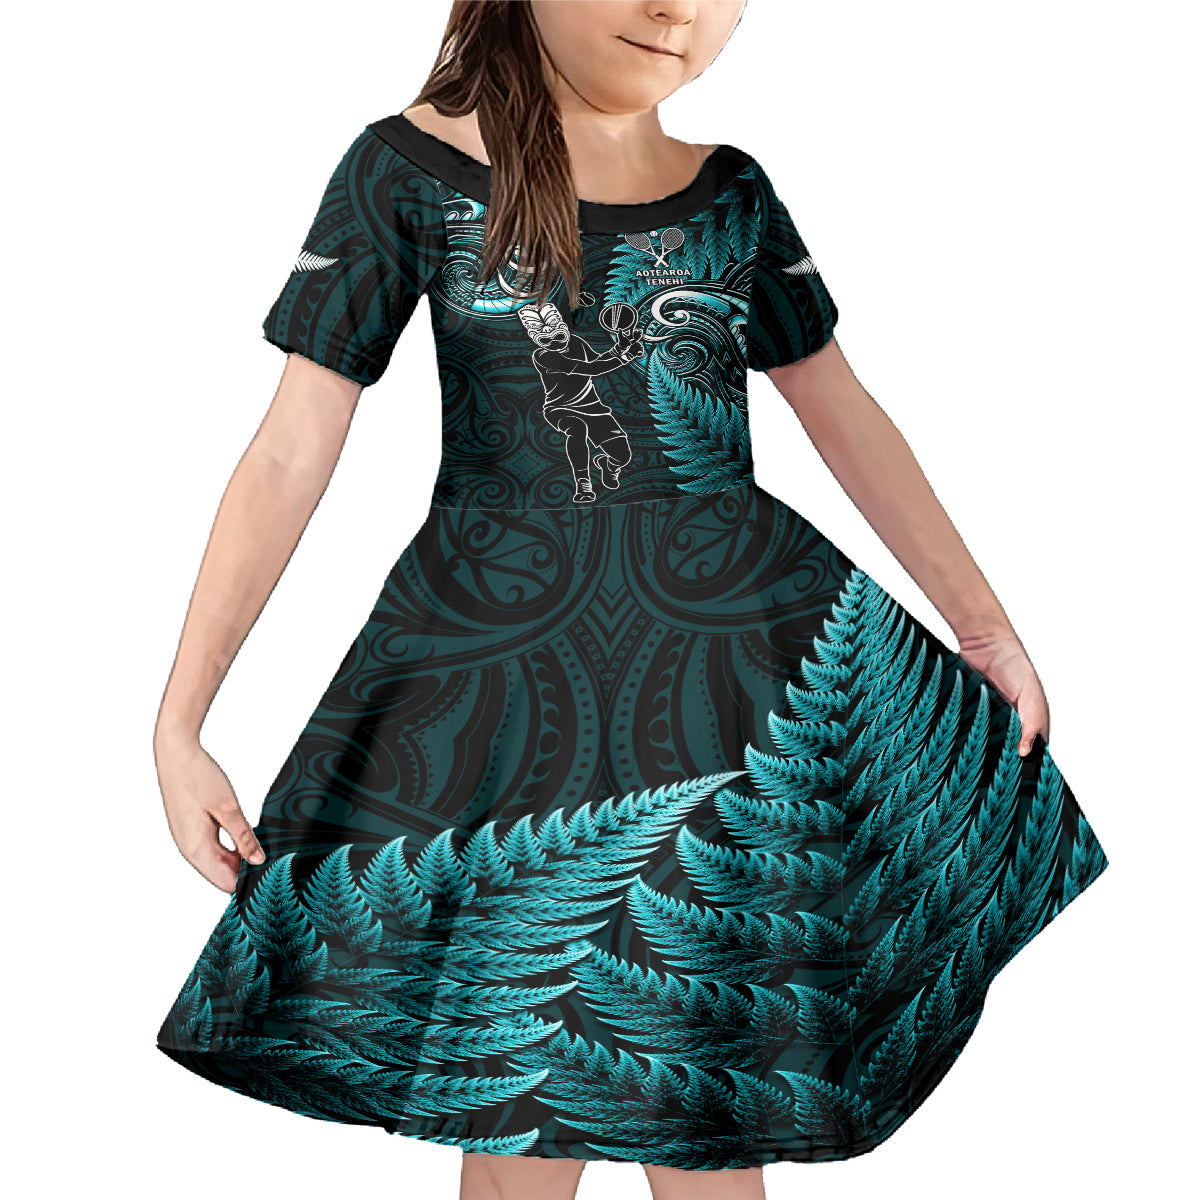 Custom New Zealand Tiki Tennis Family Matching Mermaid Dress and Hawaiian Shirt 2024 Aotearoa Tenehi Maori Silver Fern - Turquoise